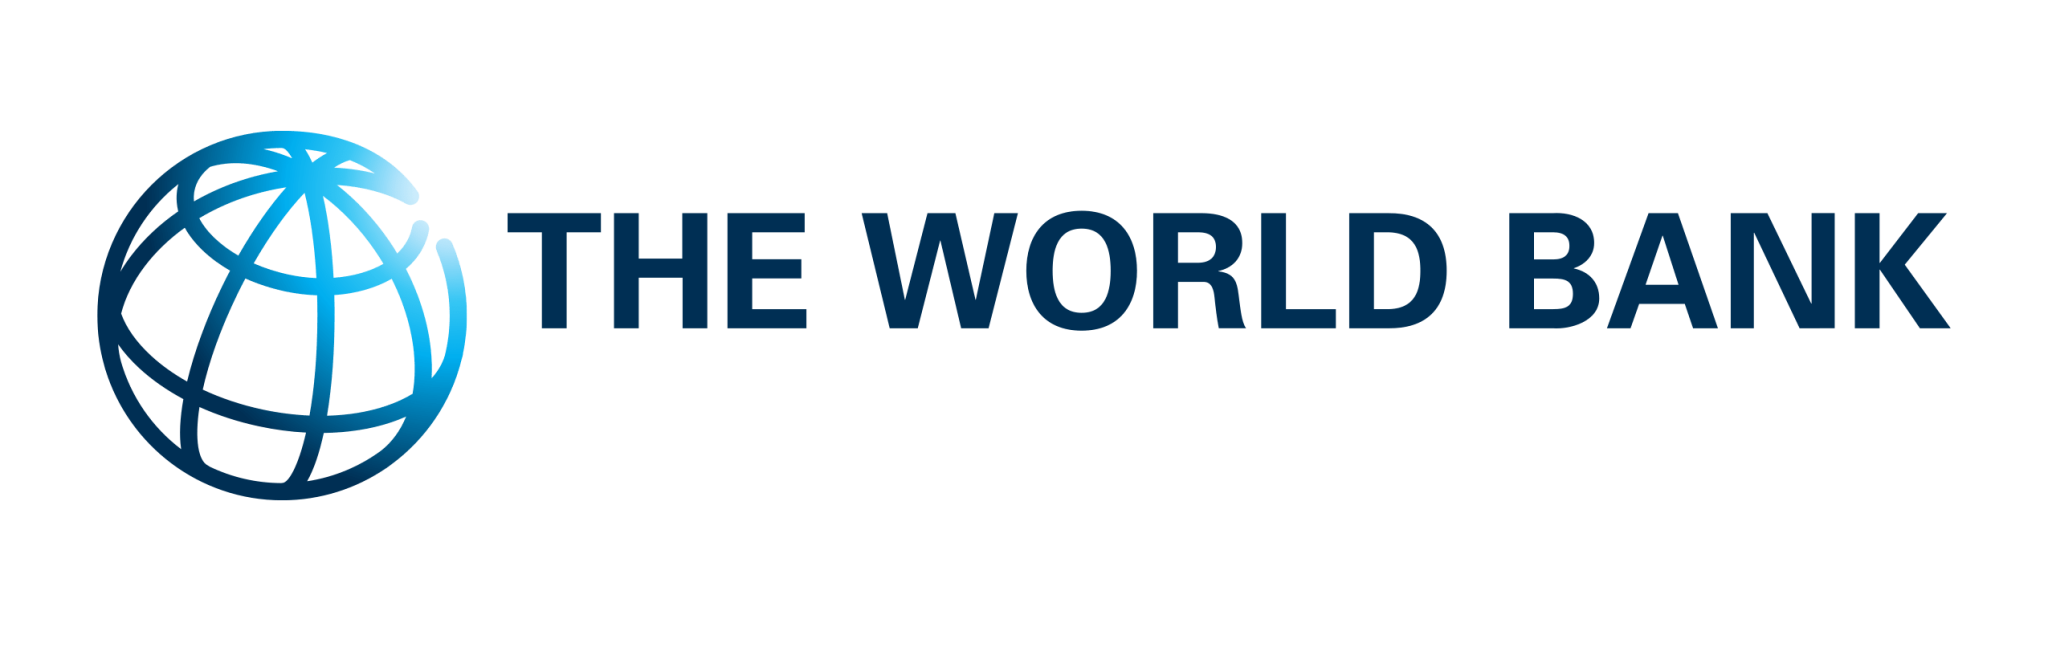 Оценка всемирного банка. The World Bank. World Bank Group. Логотип Всемирного банка. Всемирные банки.